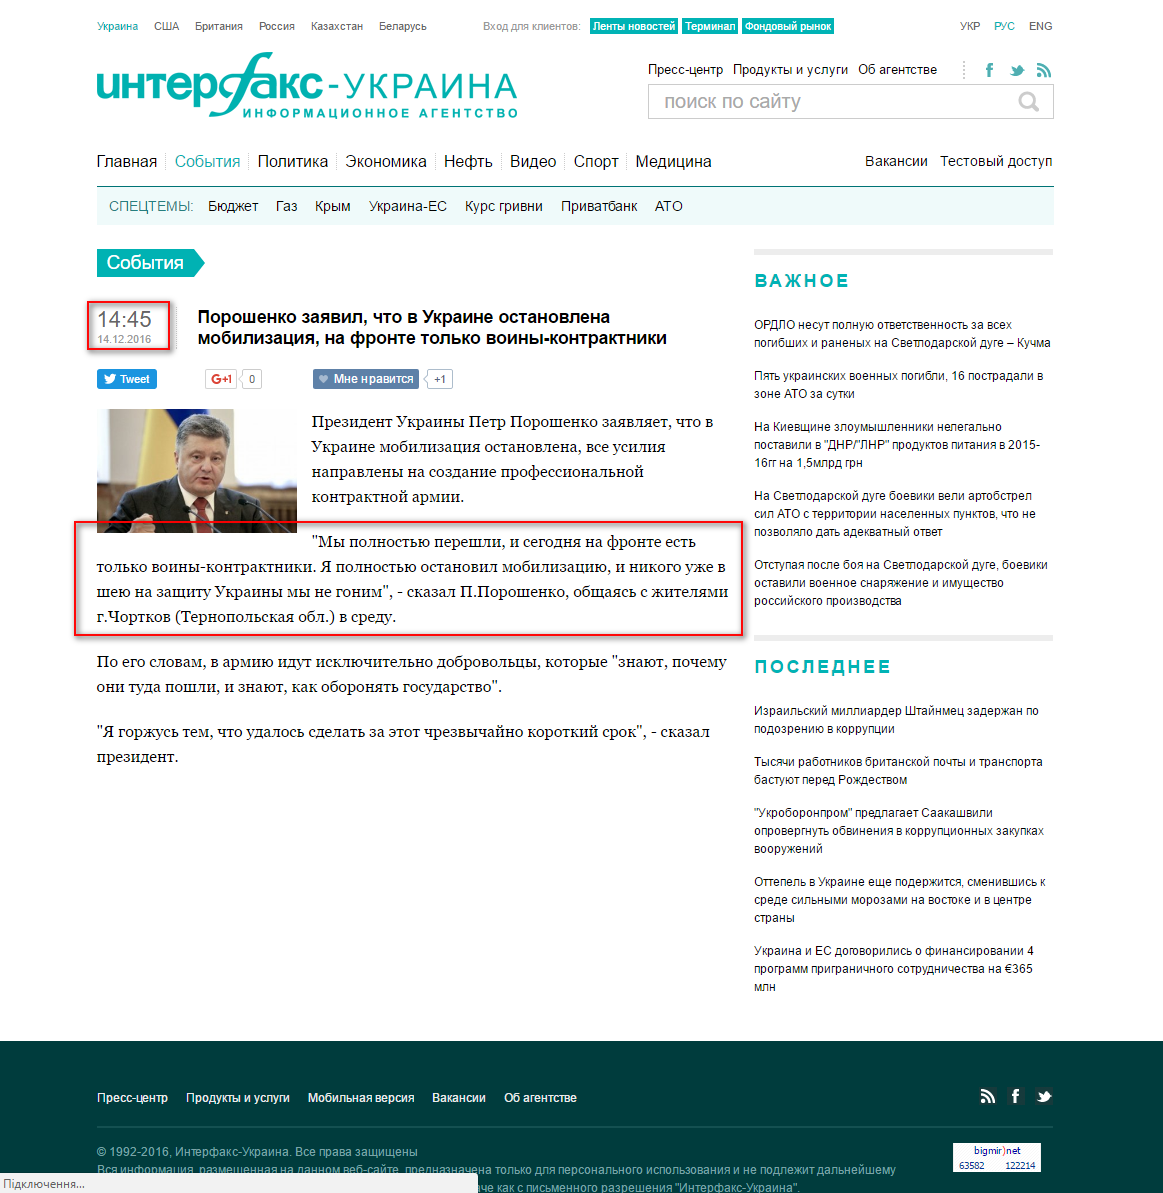 http://interfax.com.ua/news/general/390645.html